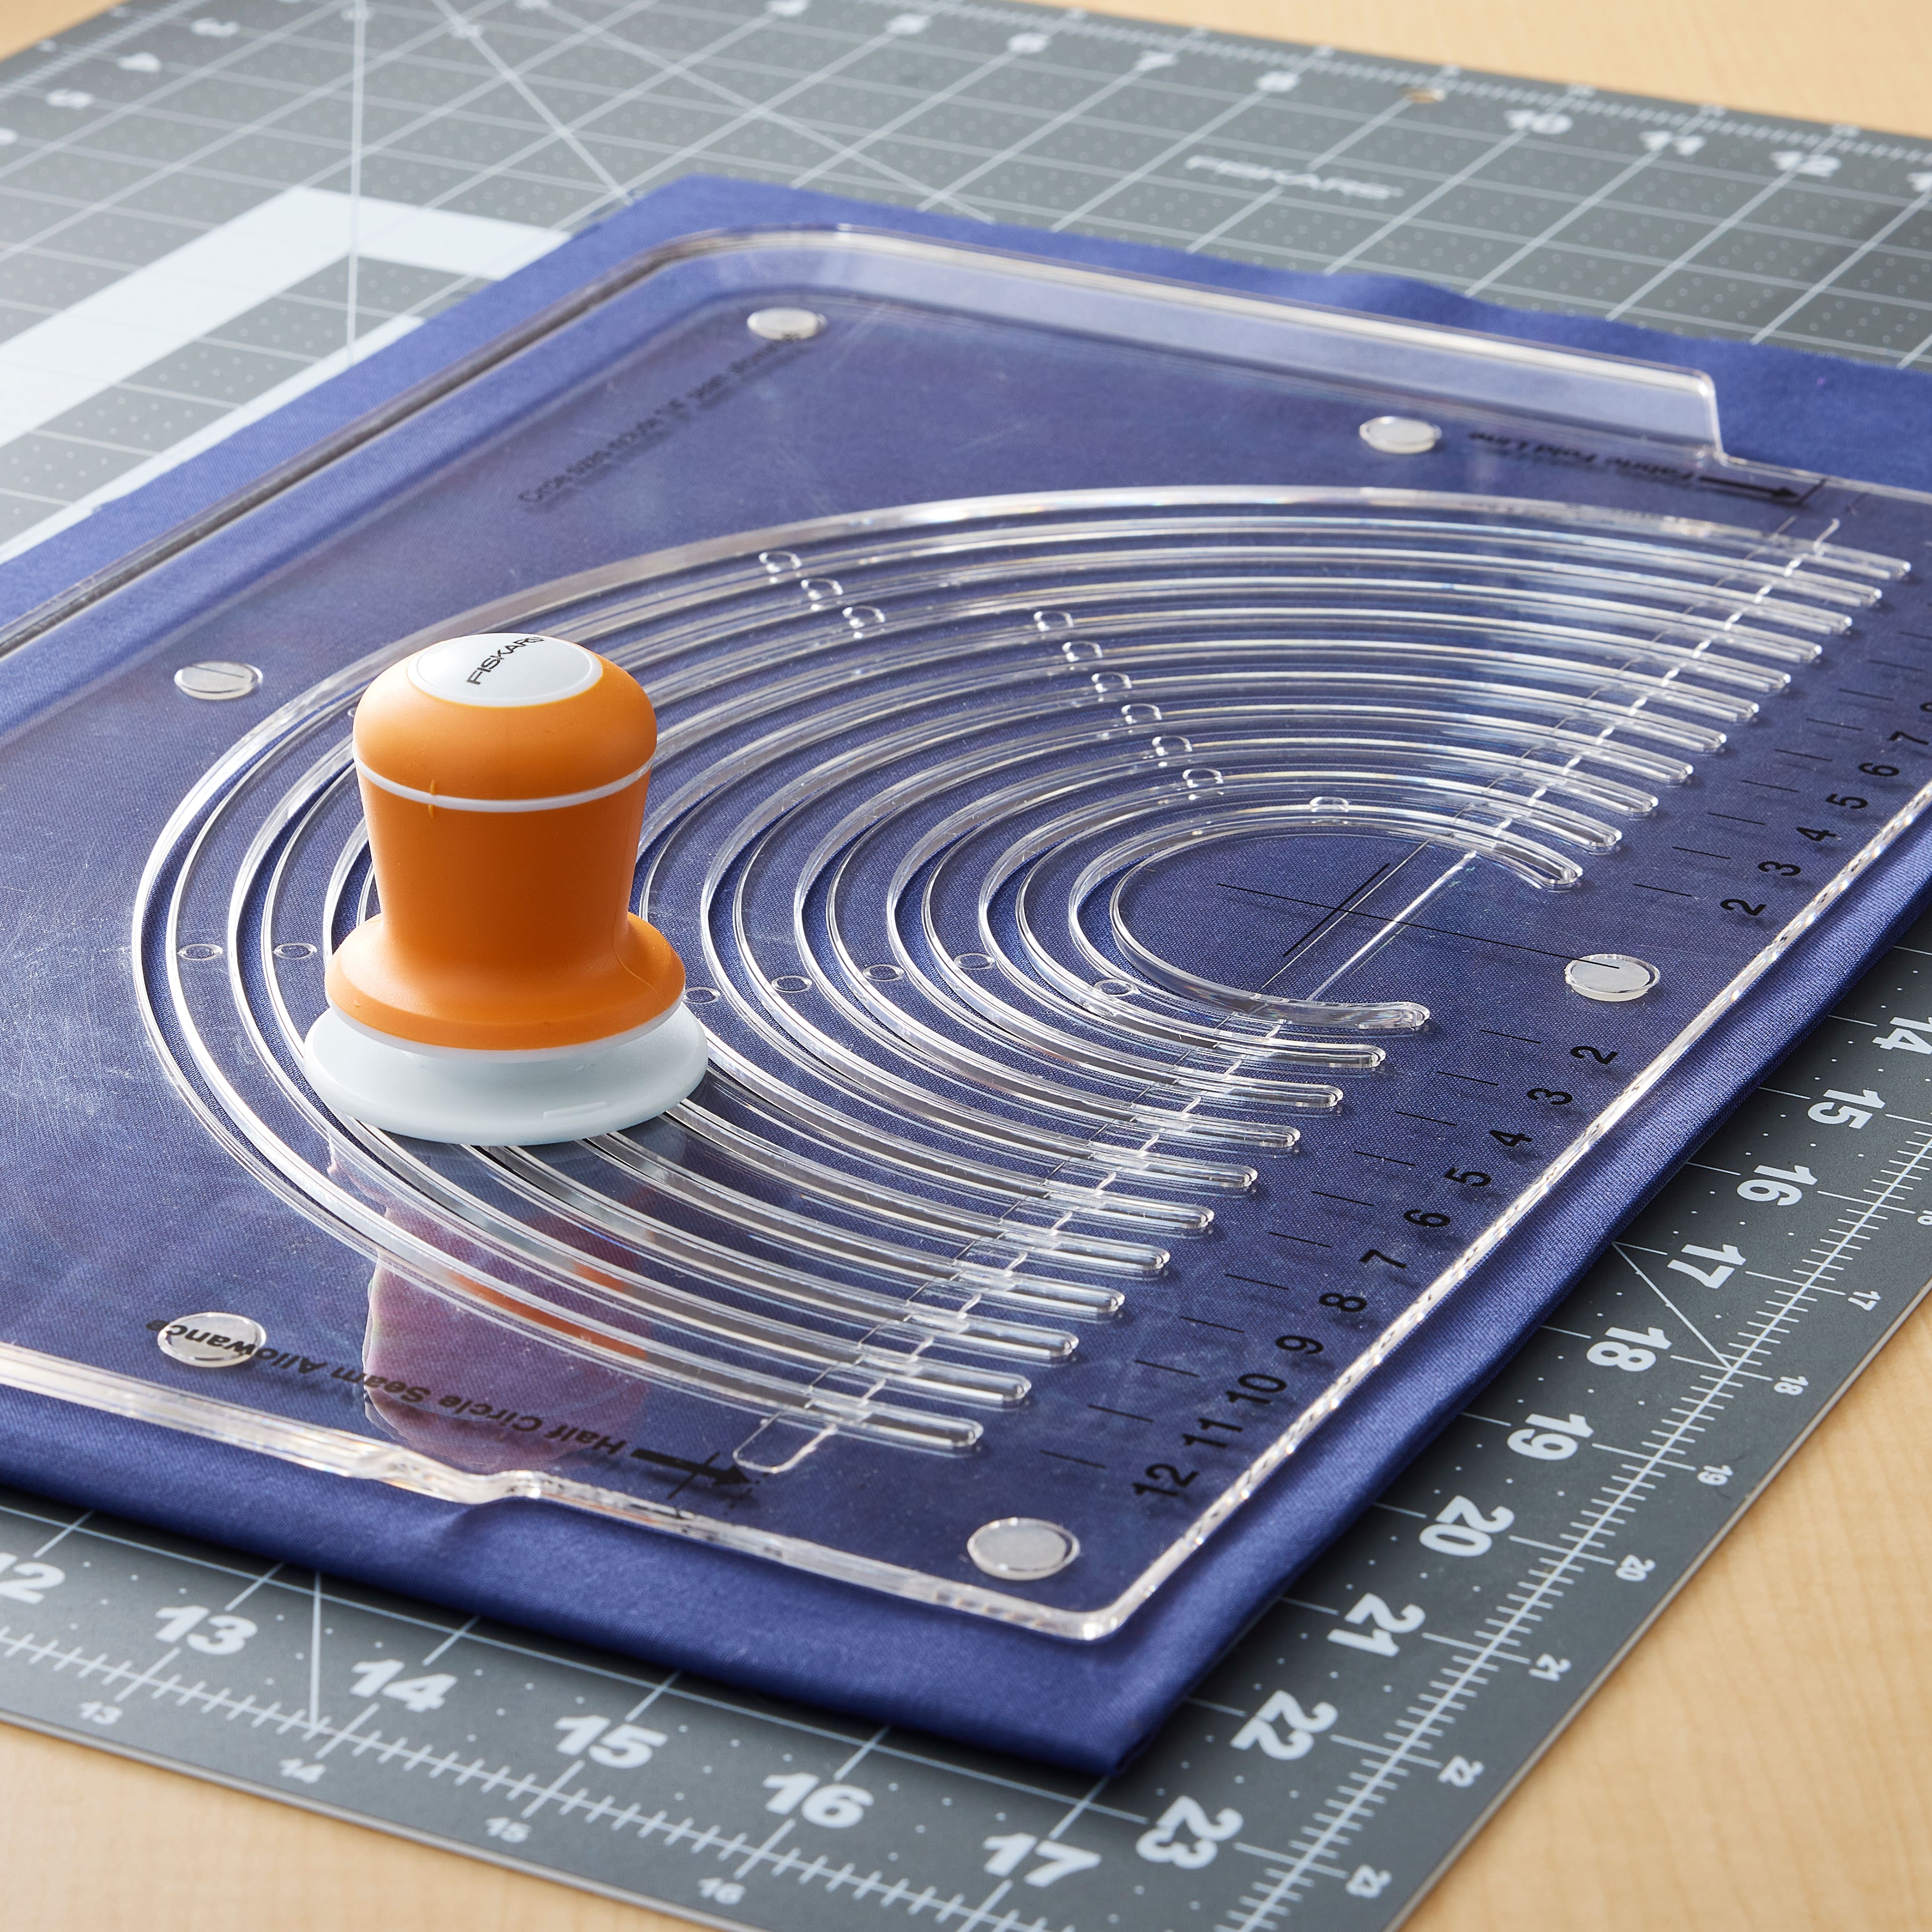 Fiskars Fiskars Circular Shaped Fabric Push Cutter With Rotating Handle Crafts Tools 